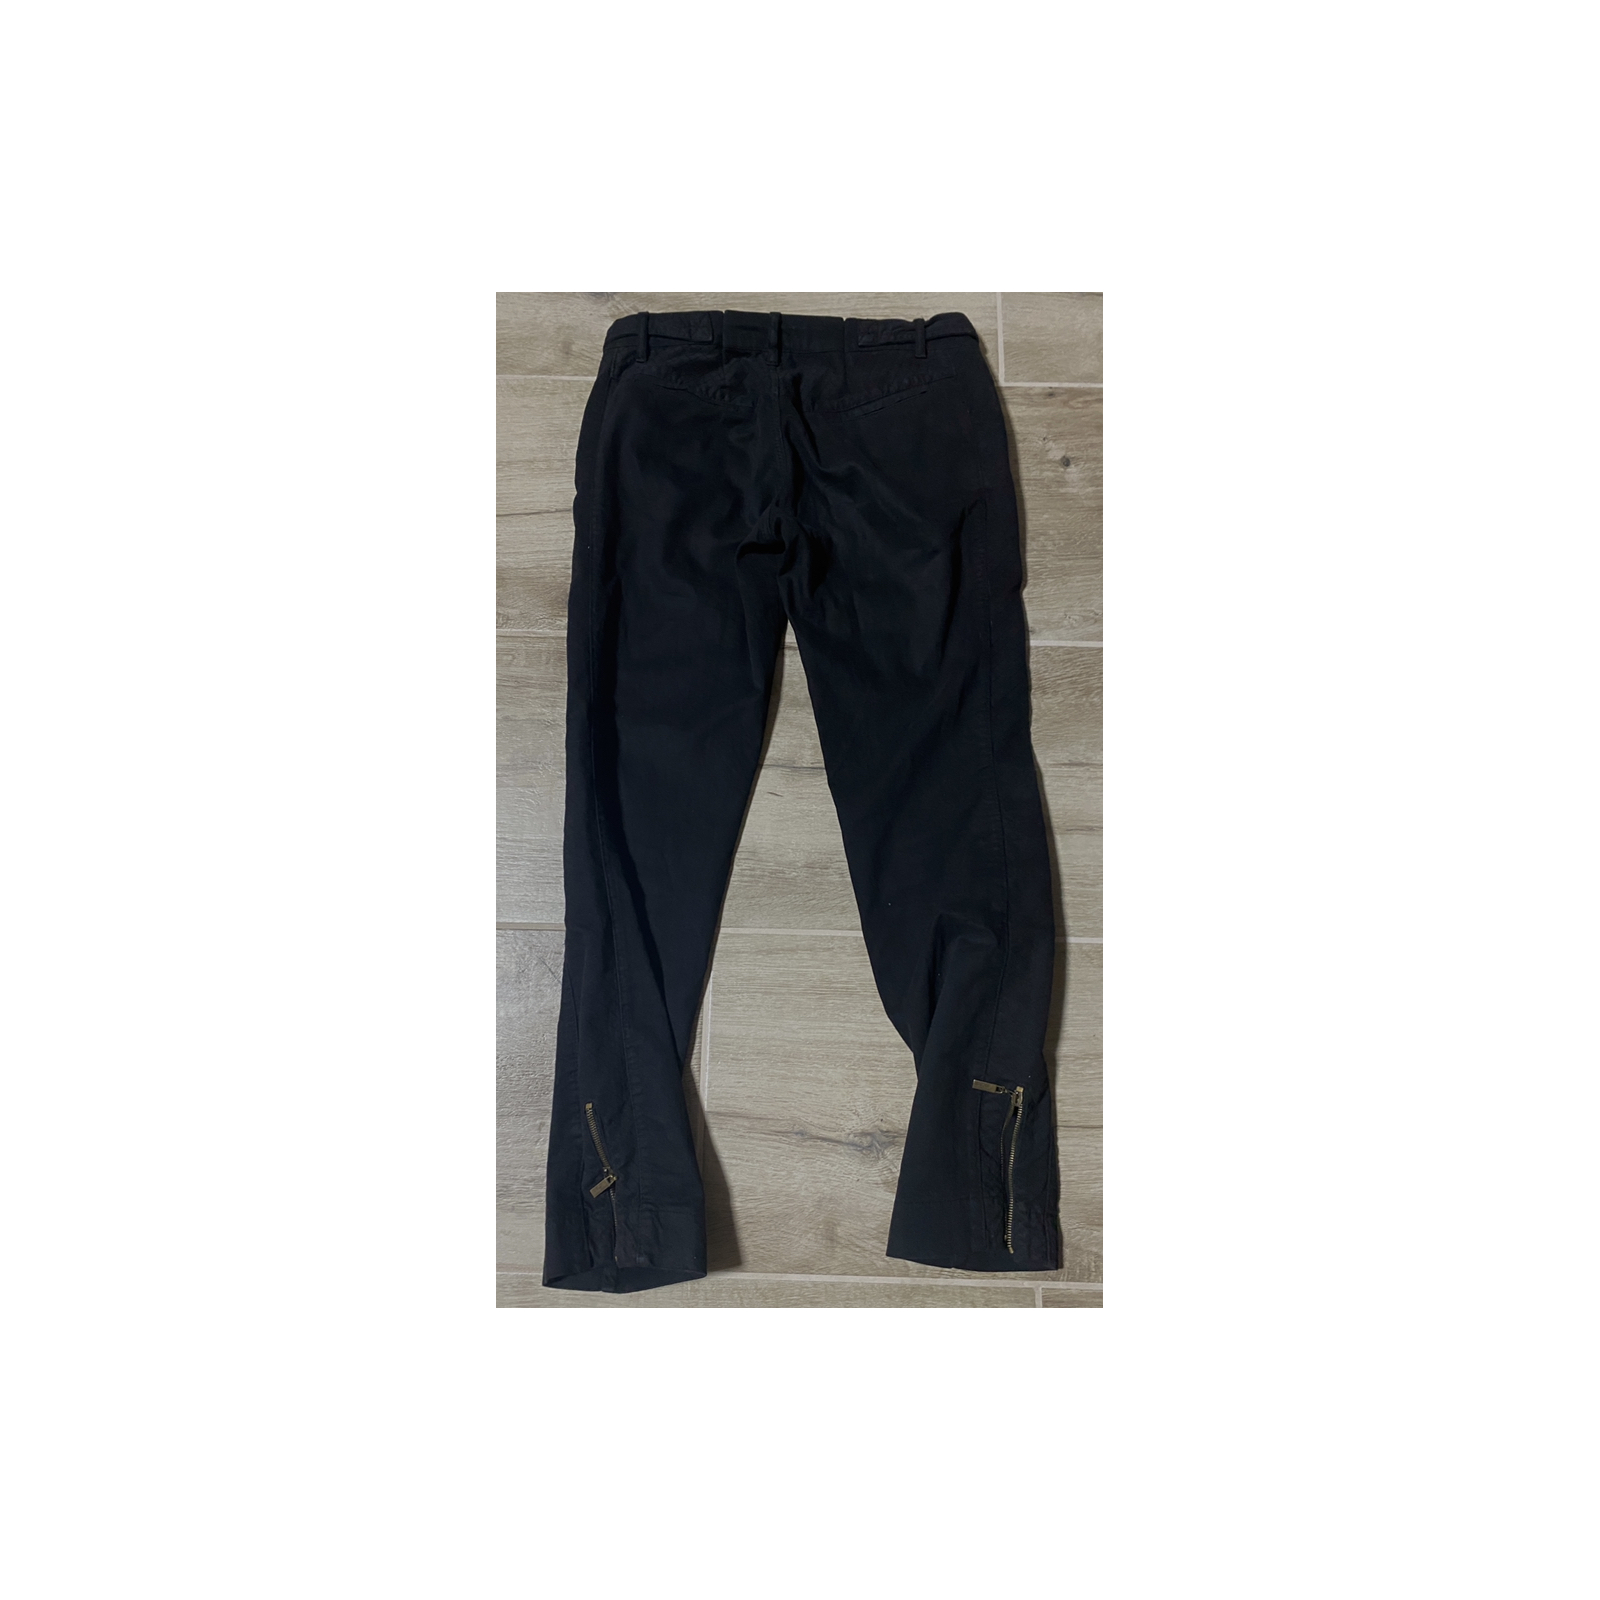 Damskie spodnie Just Cavalli  31 45